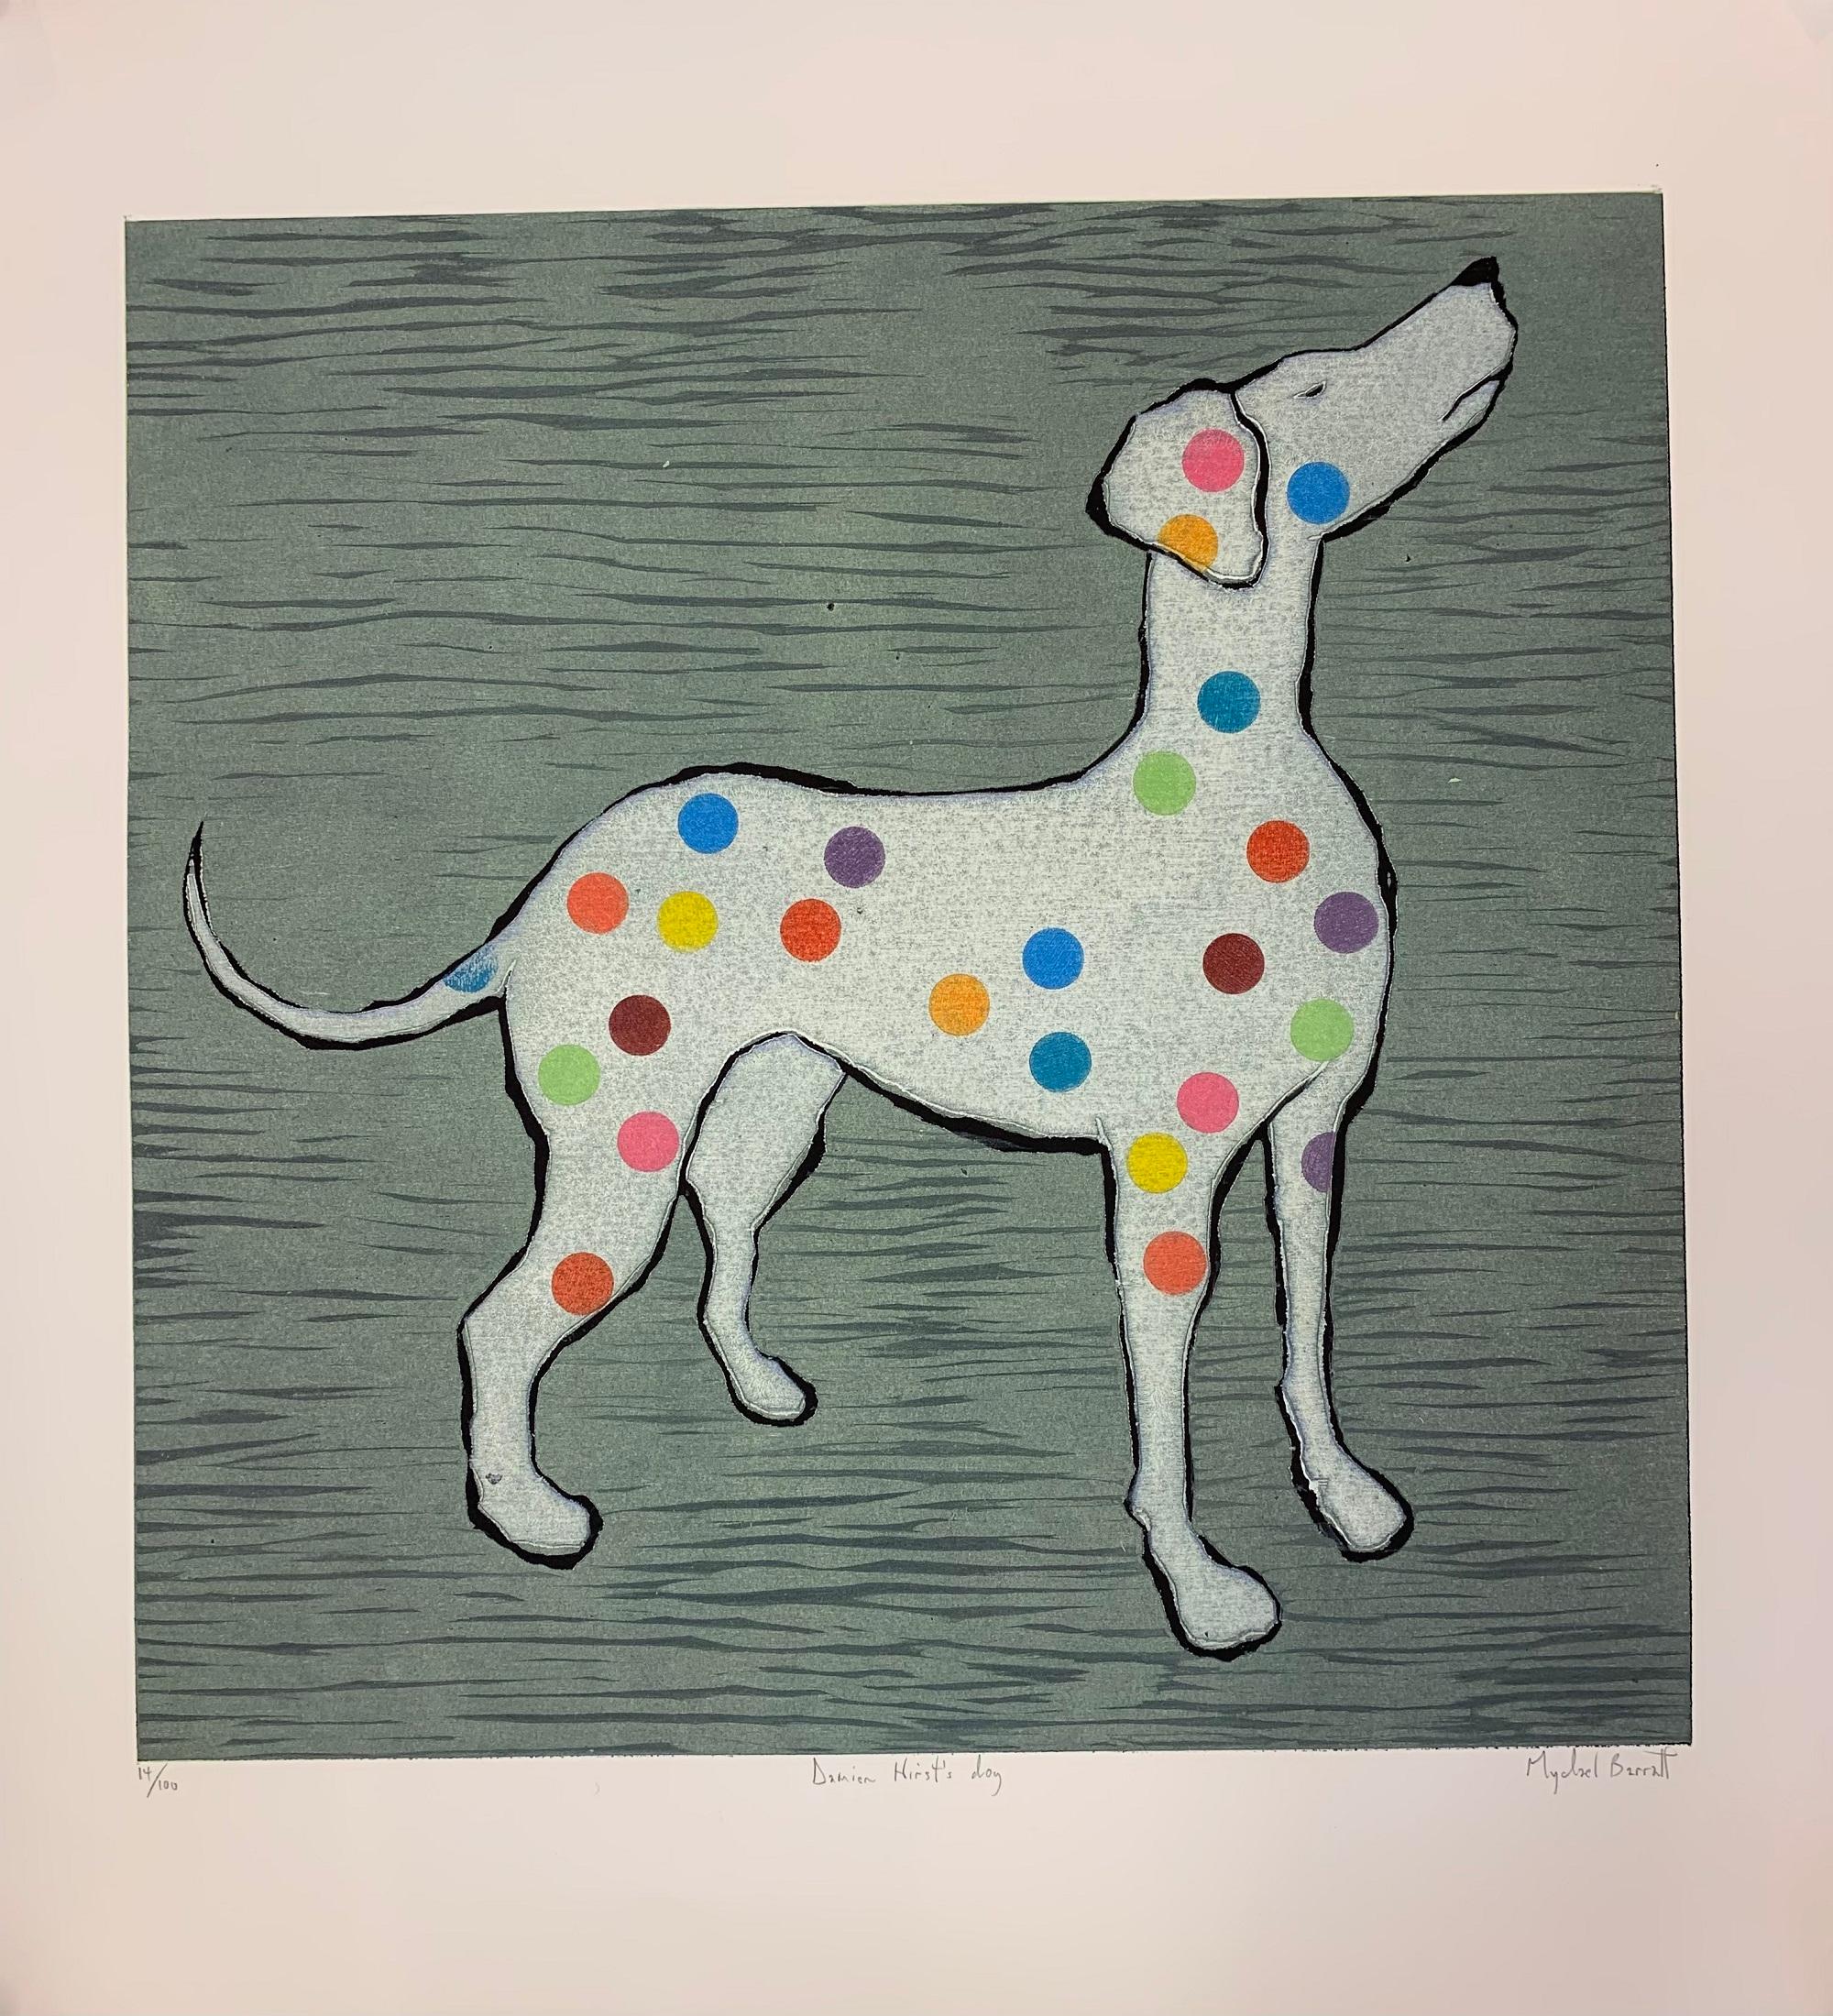 Damien Hirst's Dog, Pictures of Famous Artist's Pets, Damien Hirst Spots Style - Print by Mychael Barratt